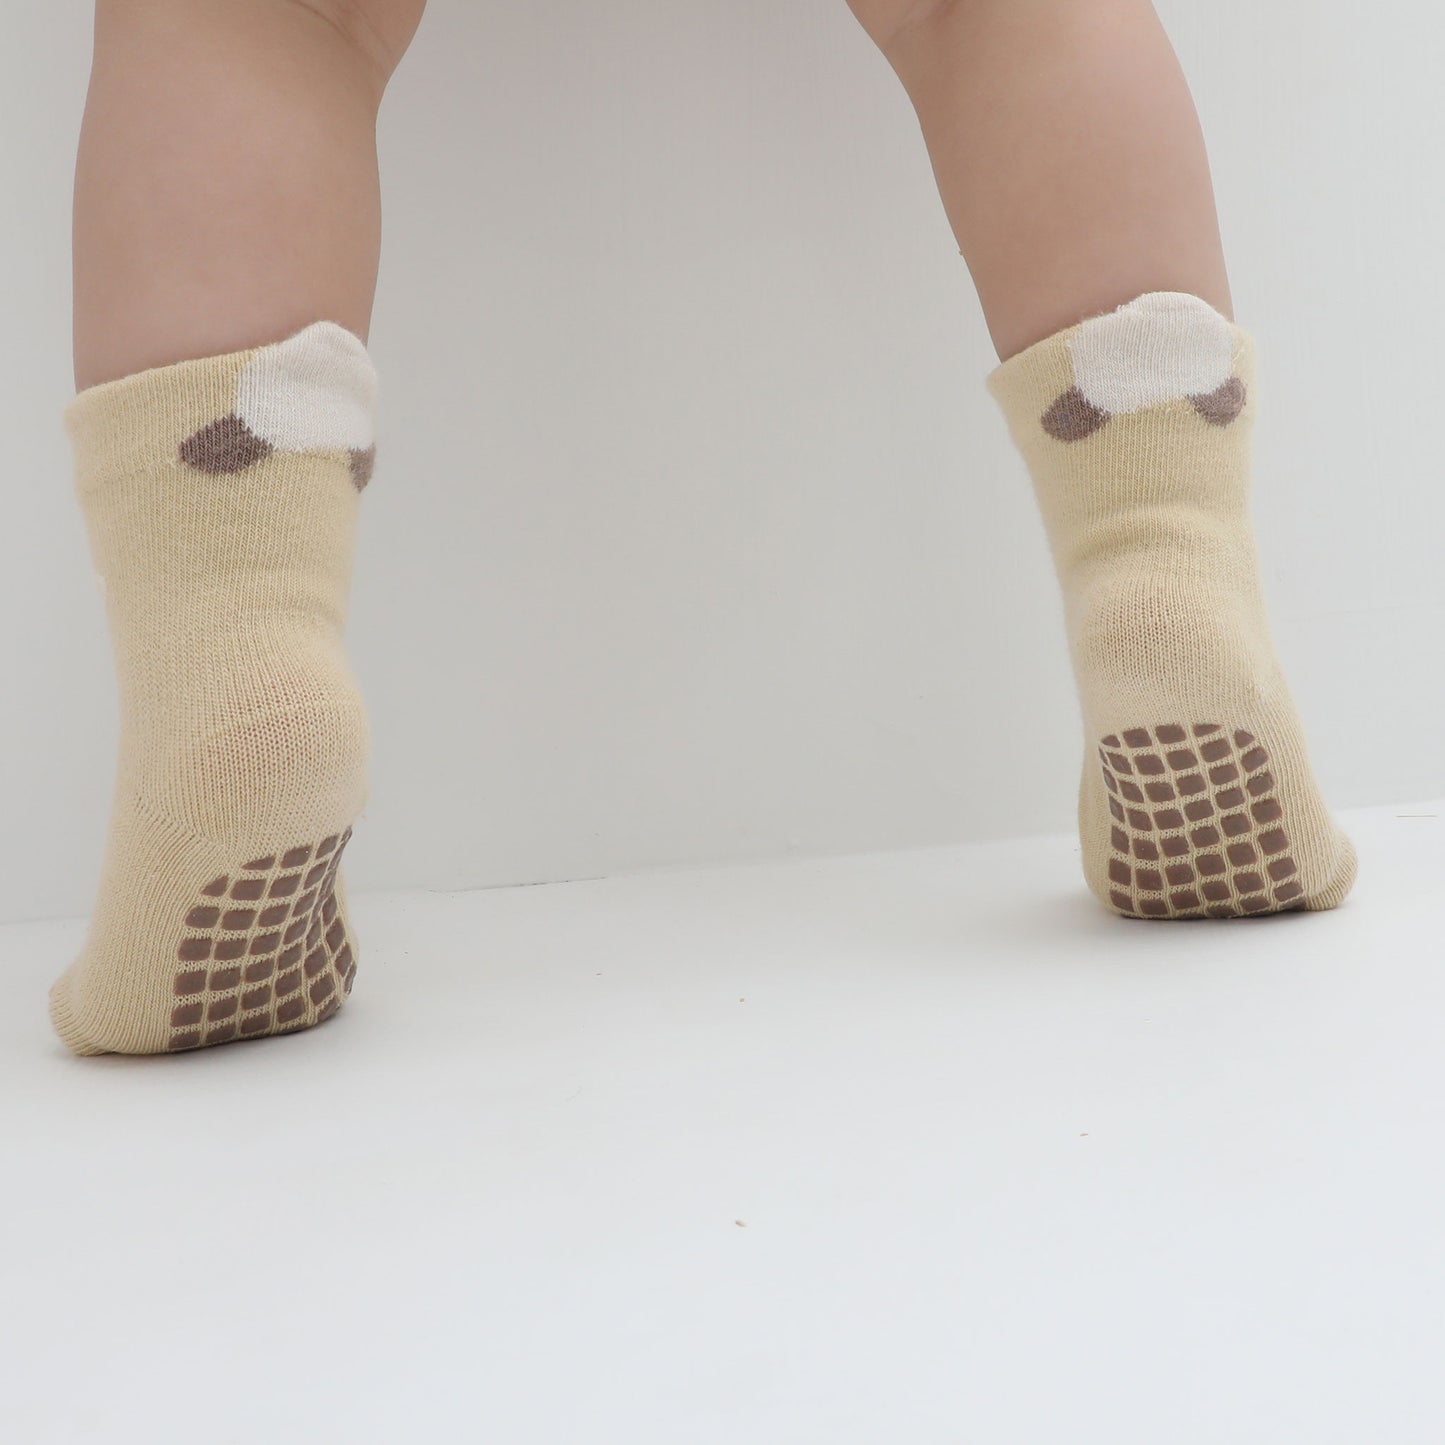 New- Hide & Seek- 5 Pairs of Stay-On Baby & Toddler Non-Slip Socks